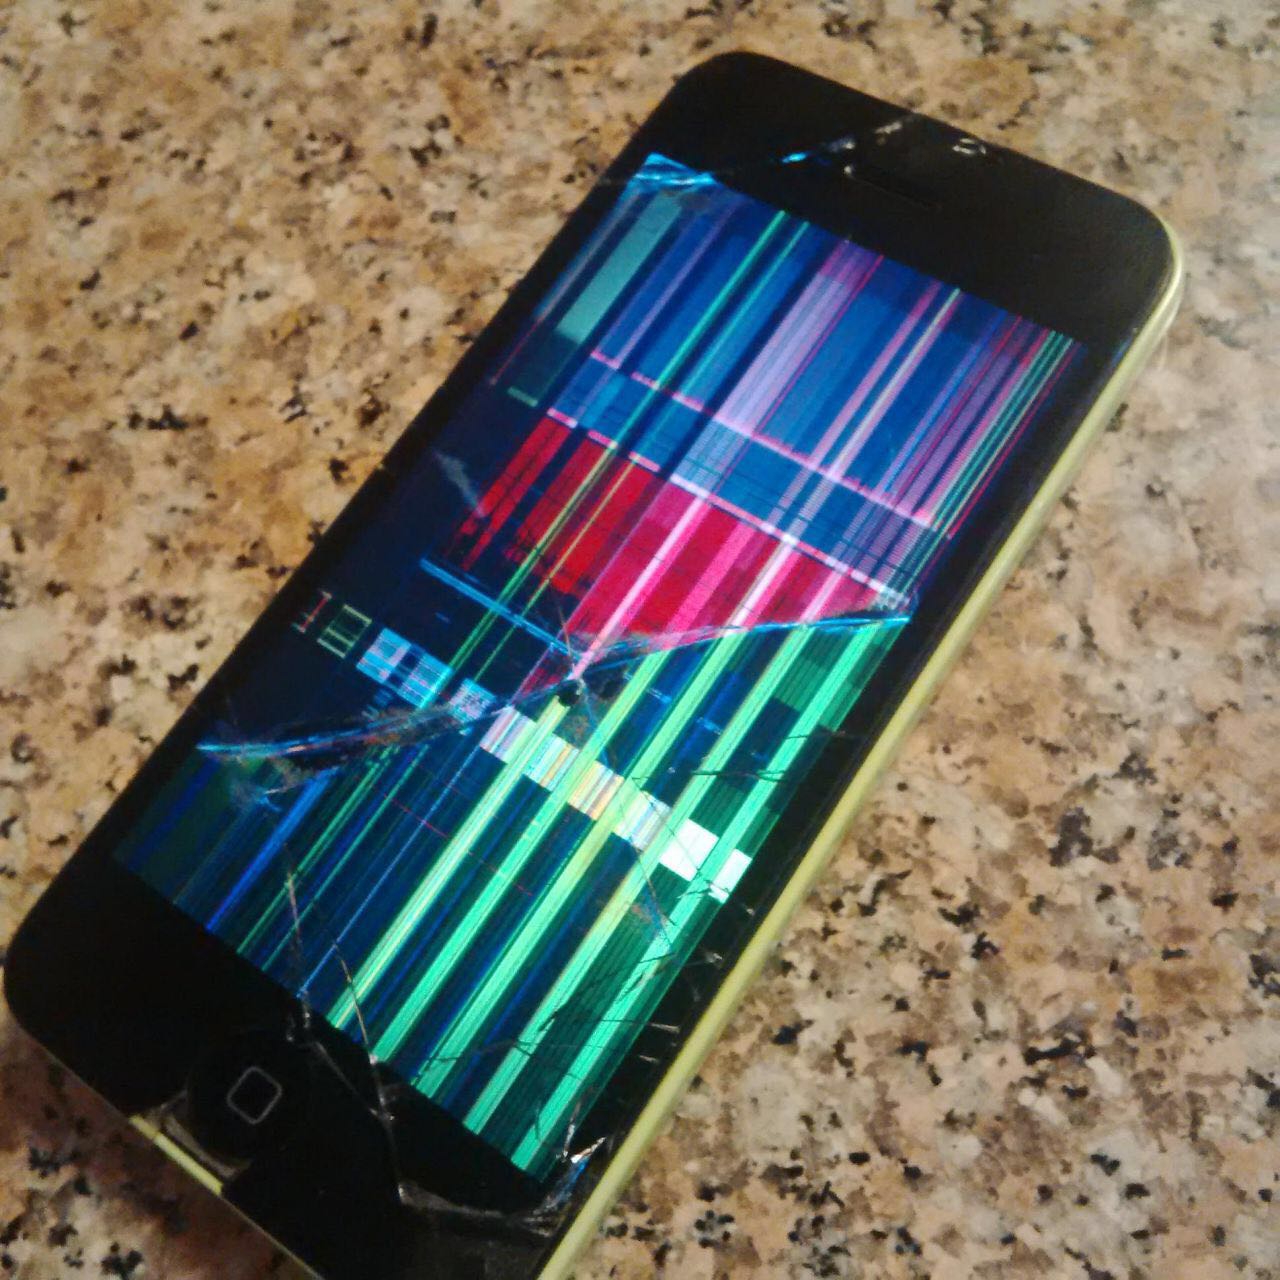 How Do I Fix A Cracked iPhone 5C screen? Call iRepairUAE ...